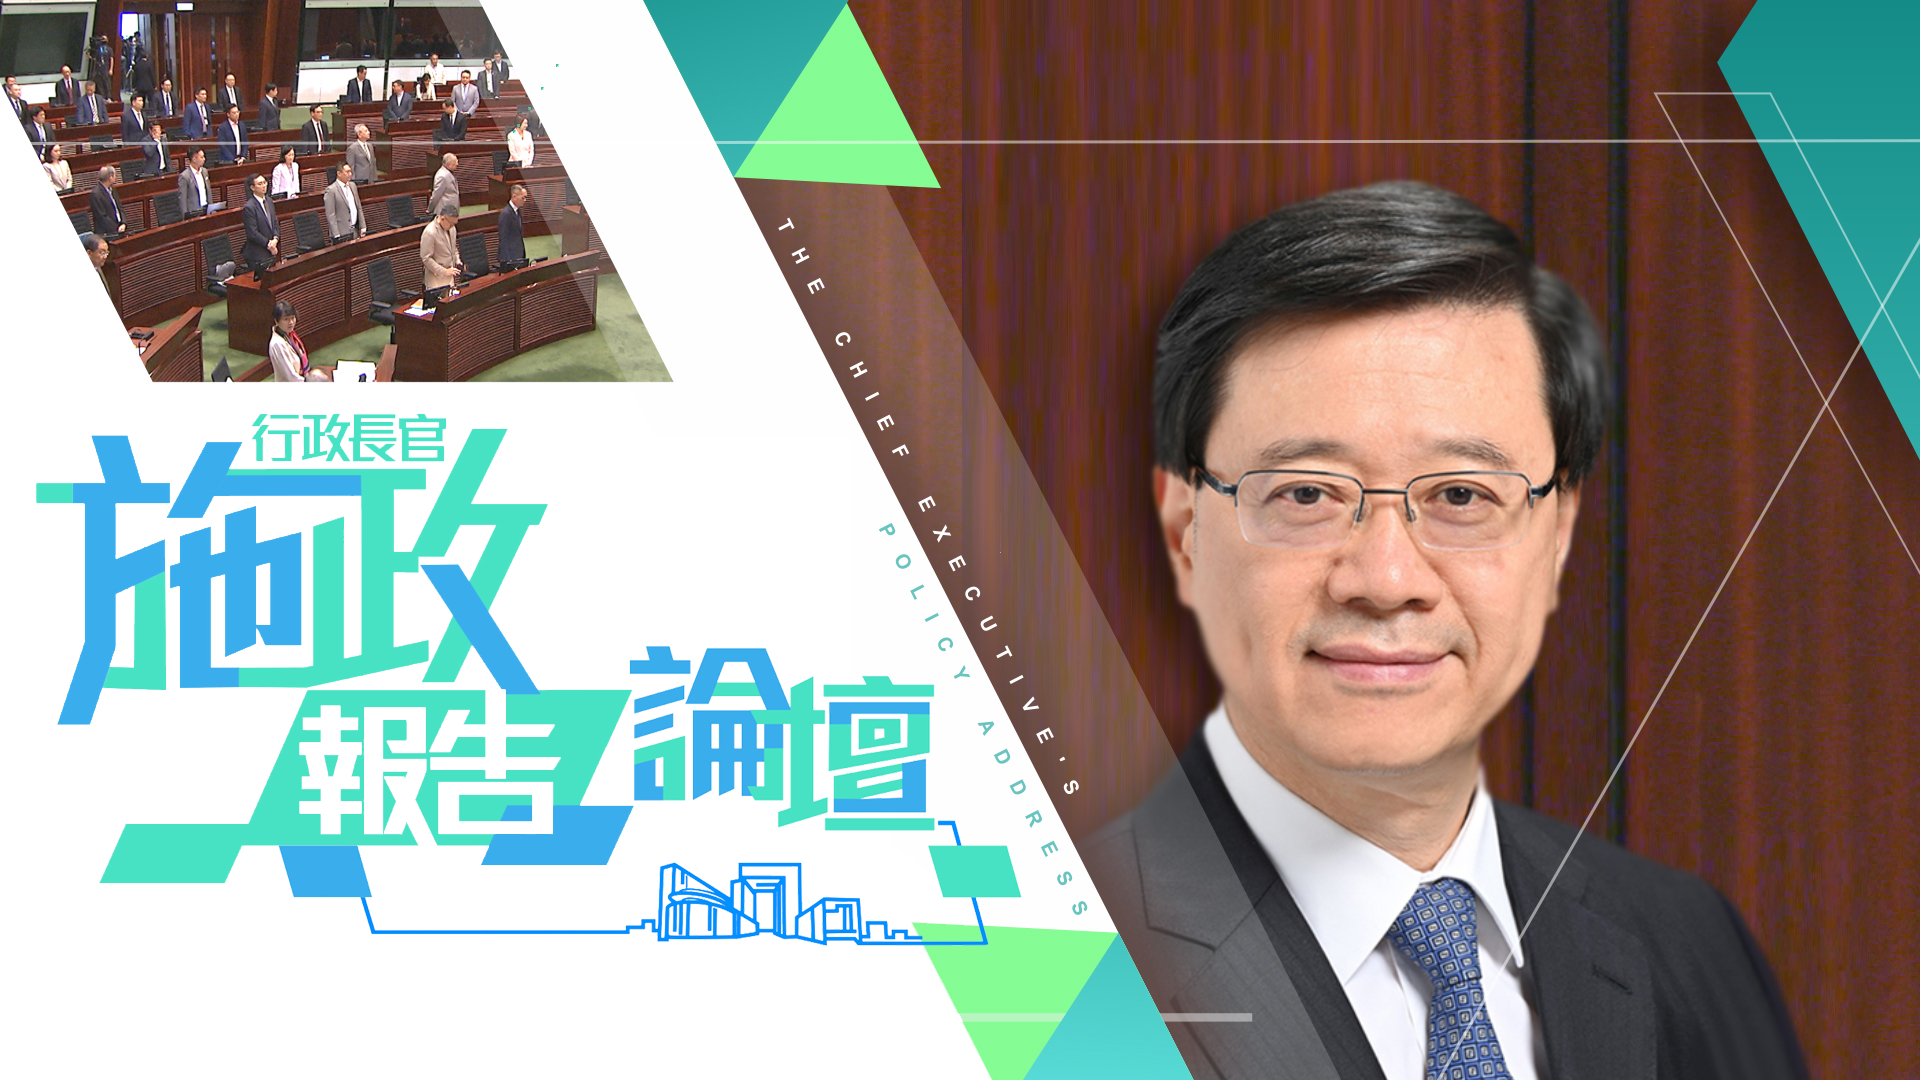 行政長官施政報告/論壇-The Chief Executive’s Policy Address & Forum 2023